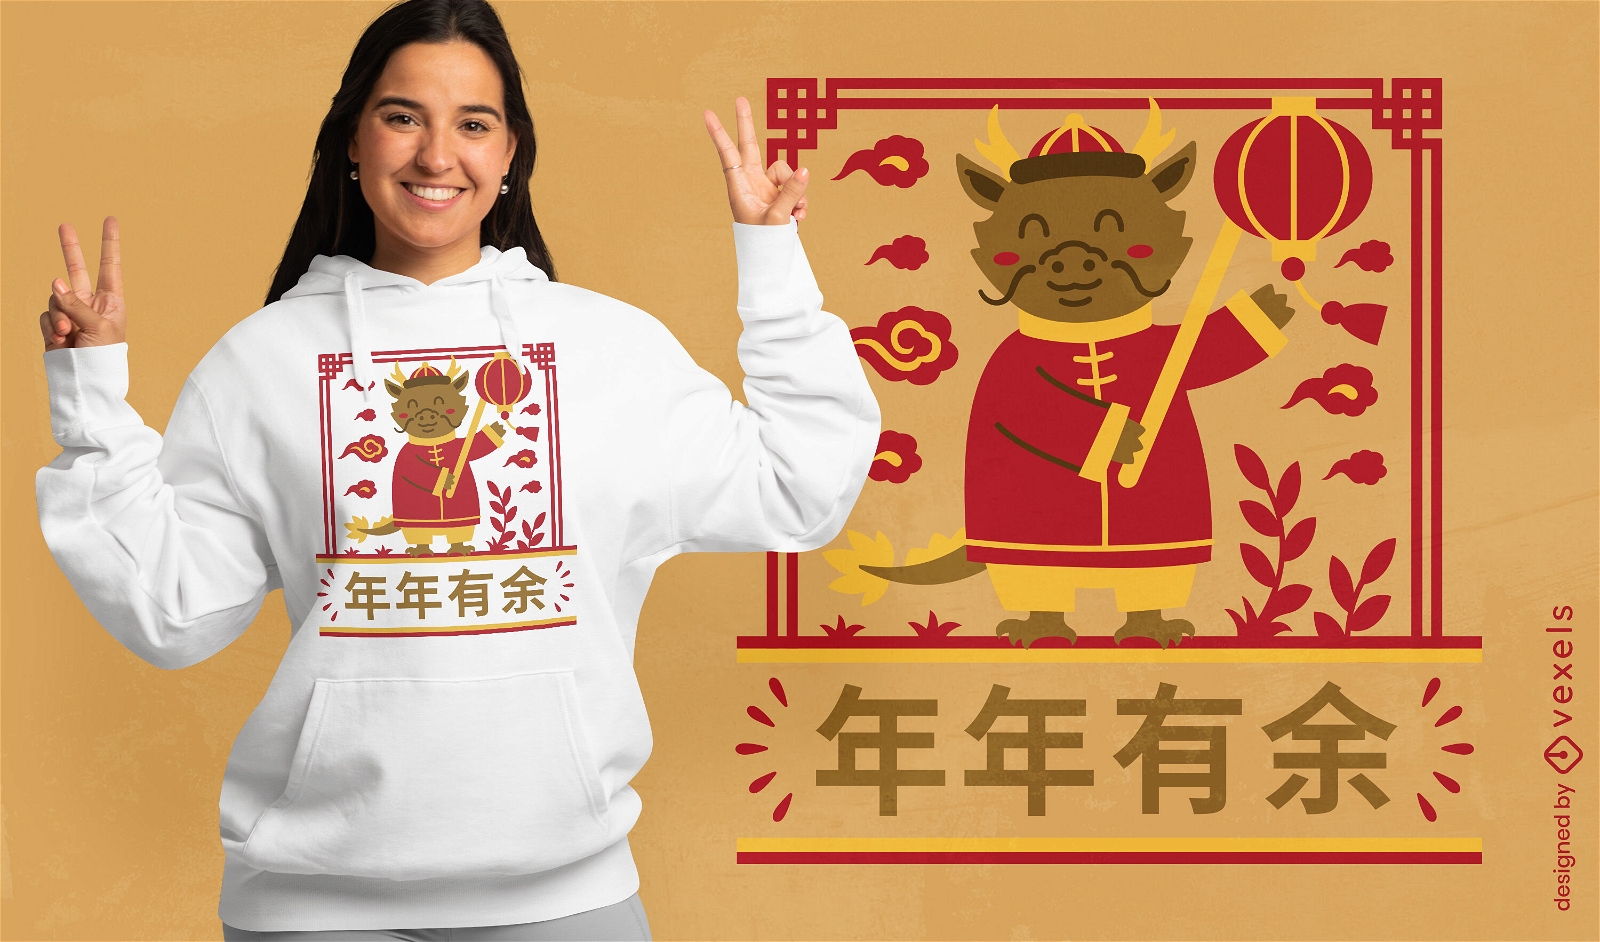 Chinese New Year celebration t-shirt design